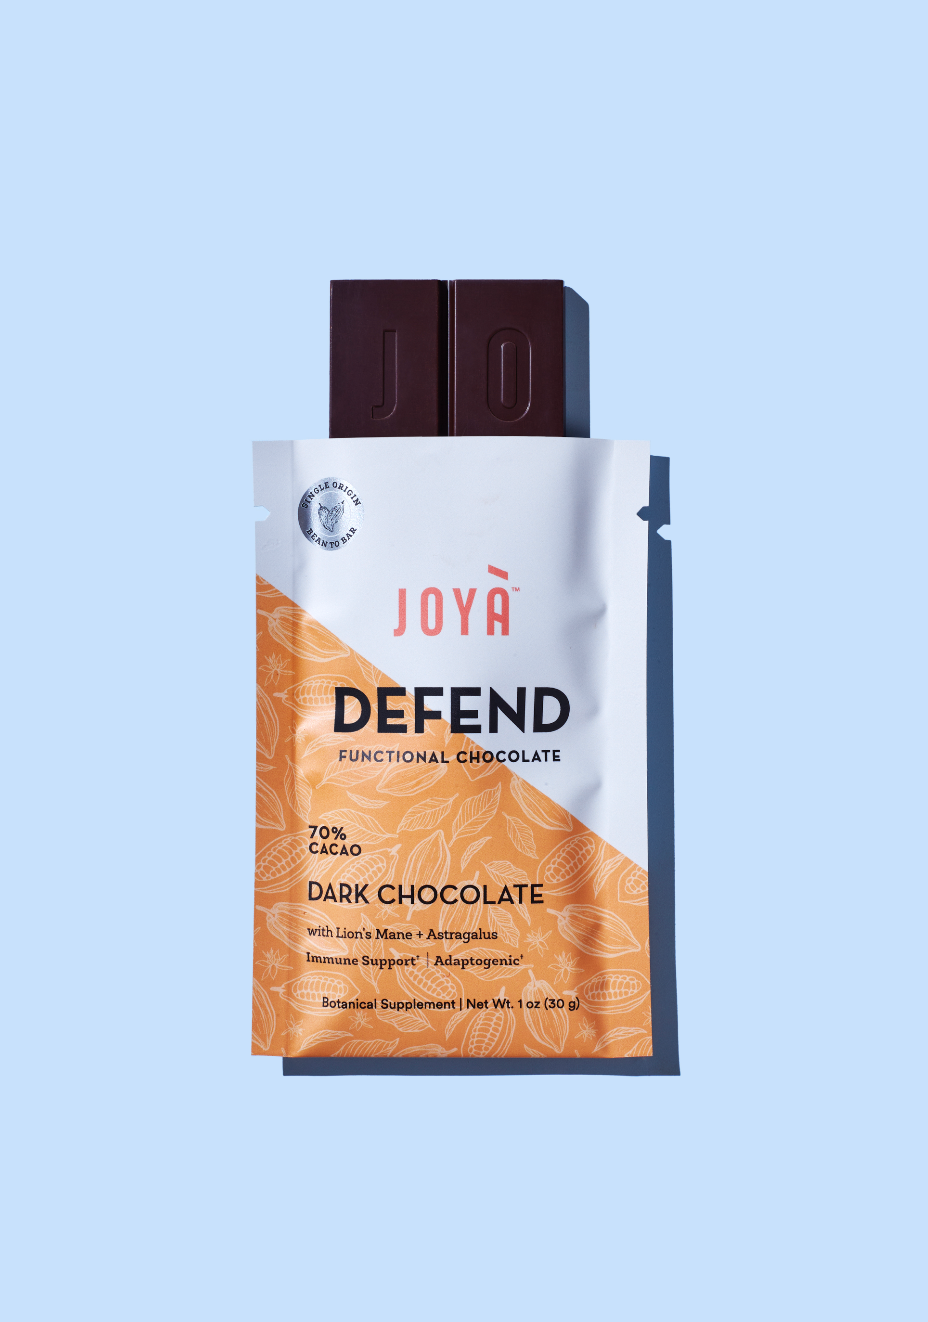 JOYÀ's Defend Functional Chocolate